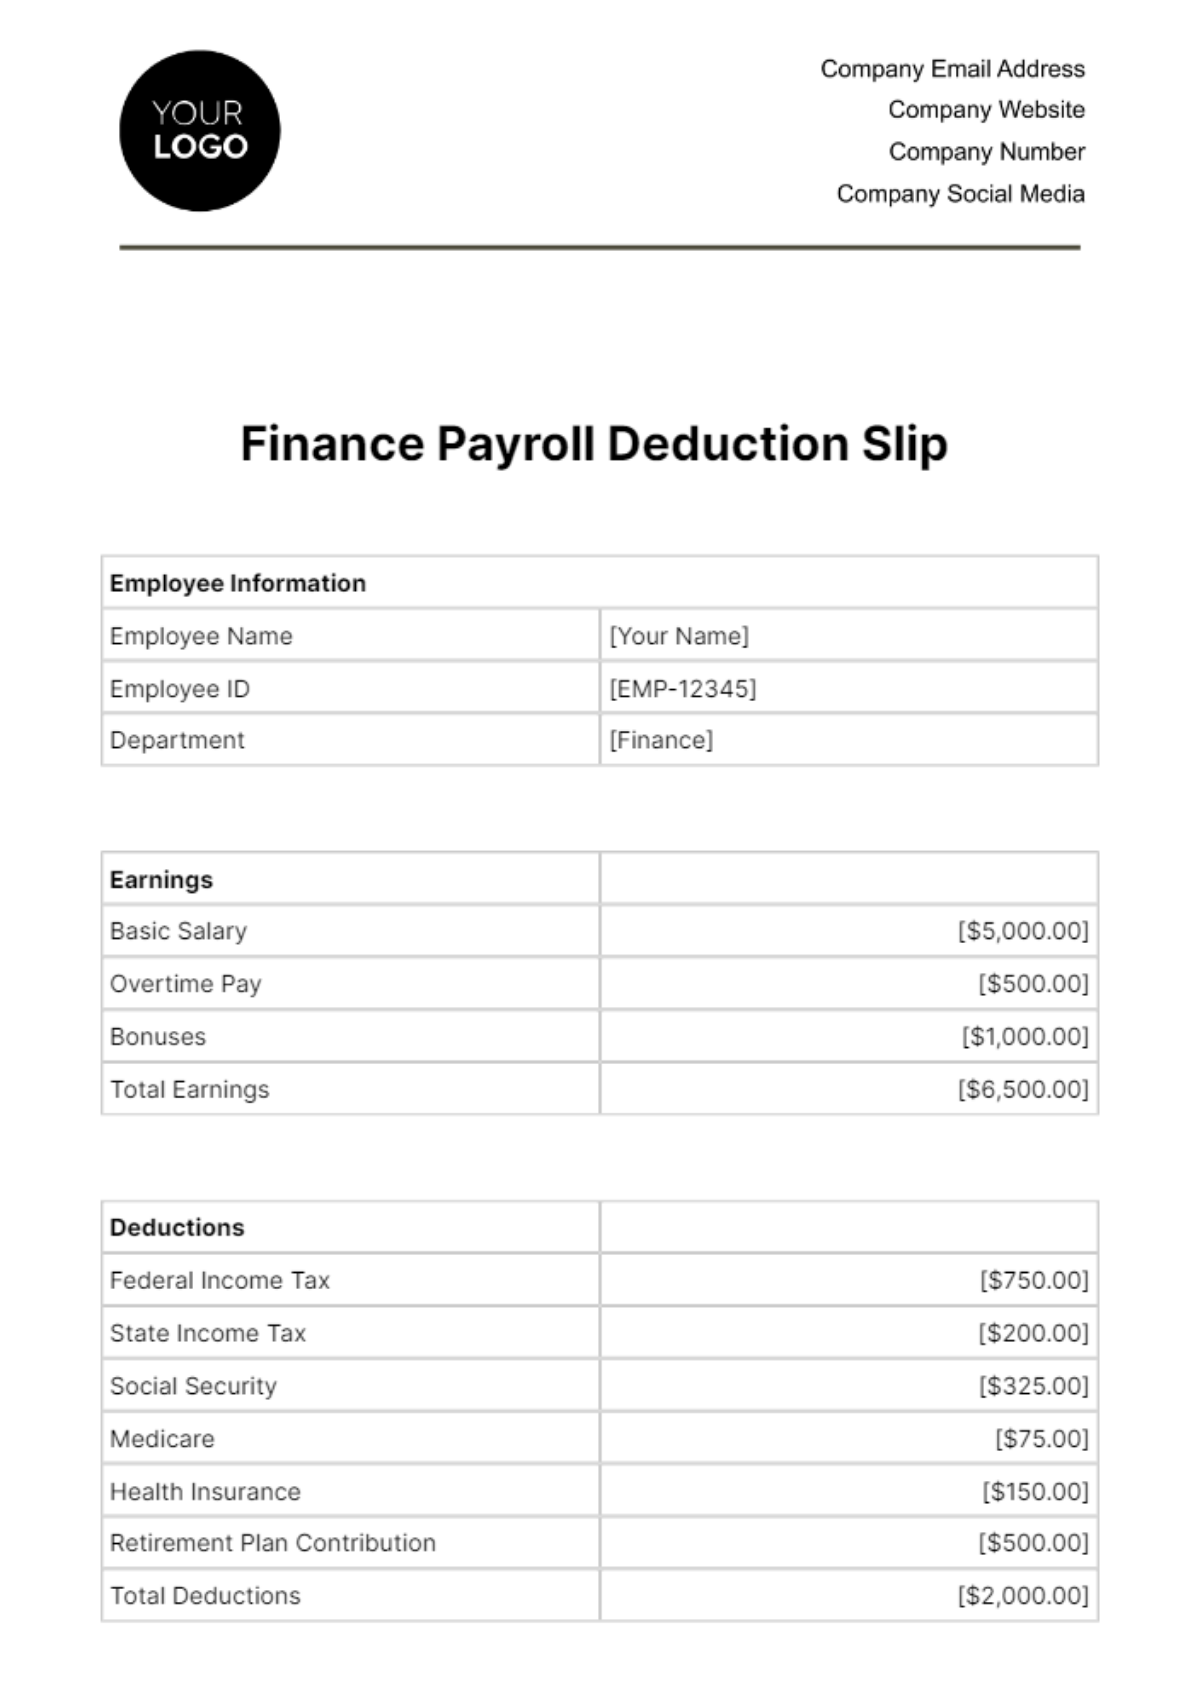 Free Finance Payroll Deduction Slip Template